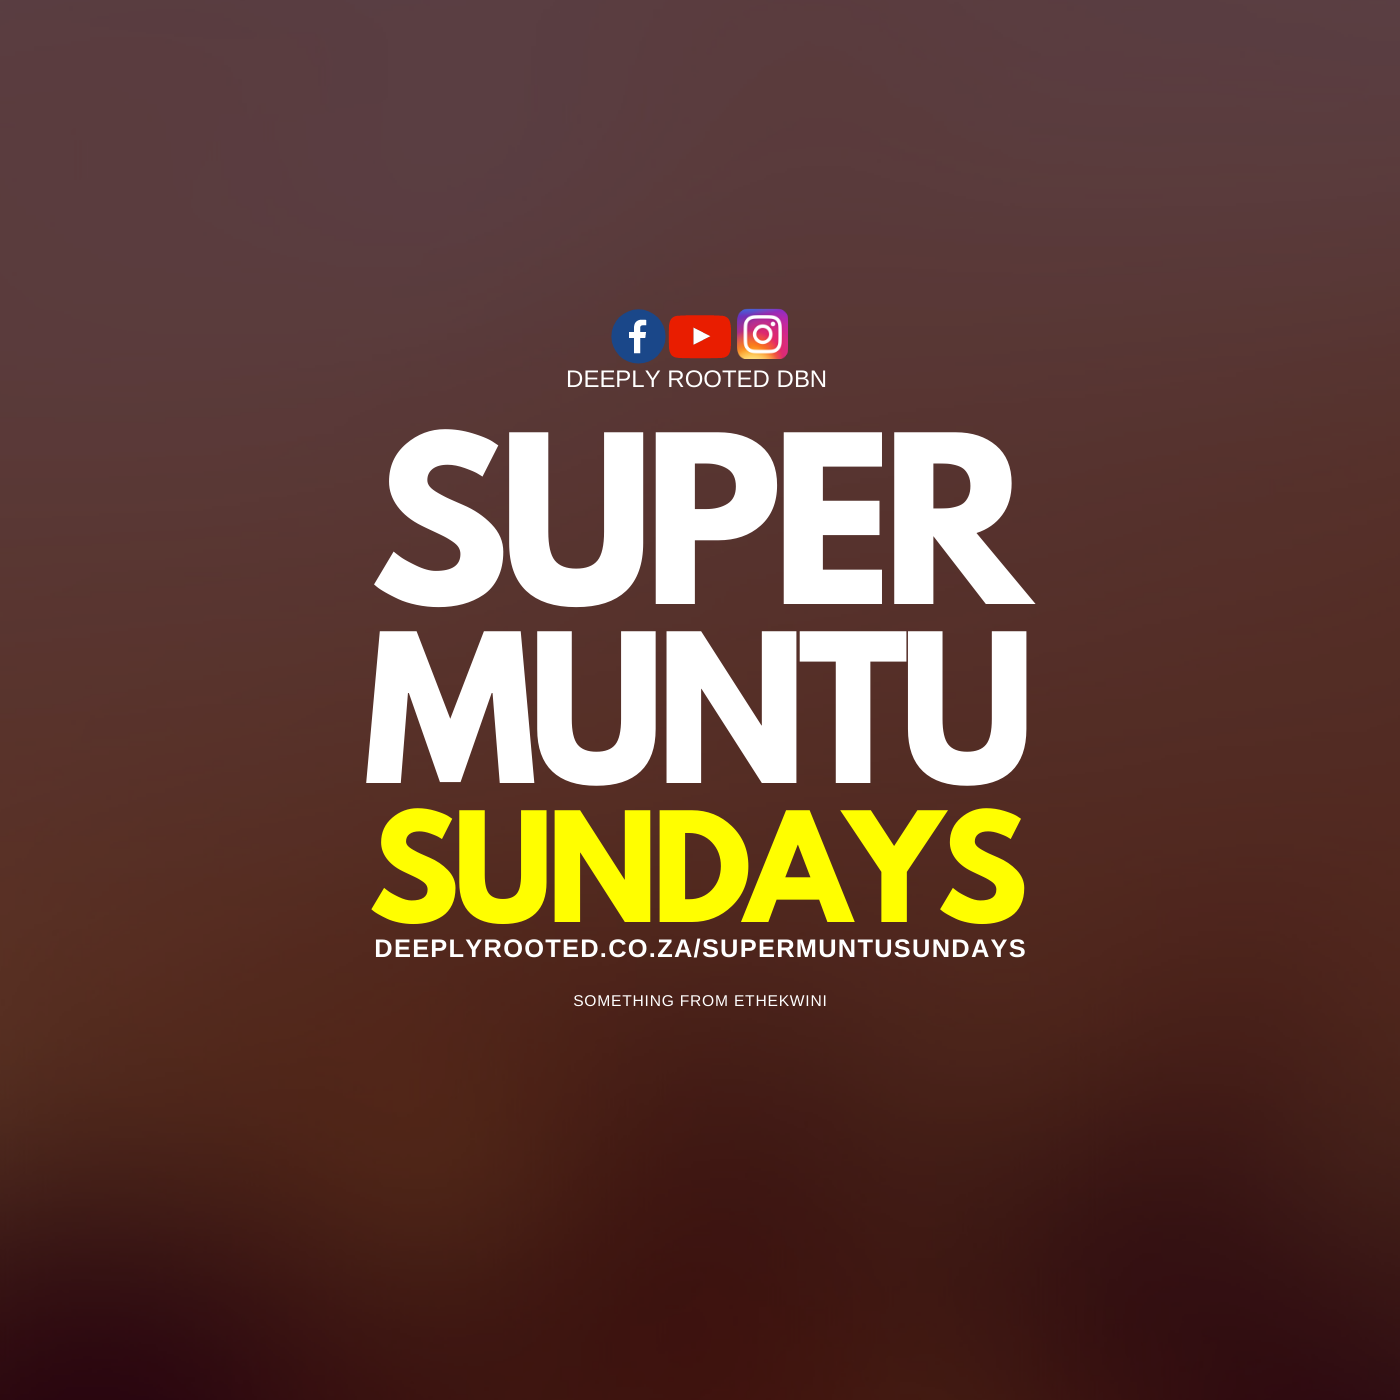 SuperMuntu Sundays